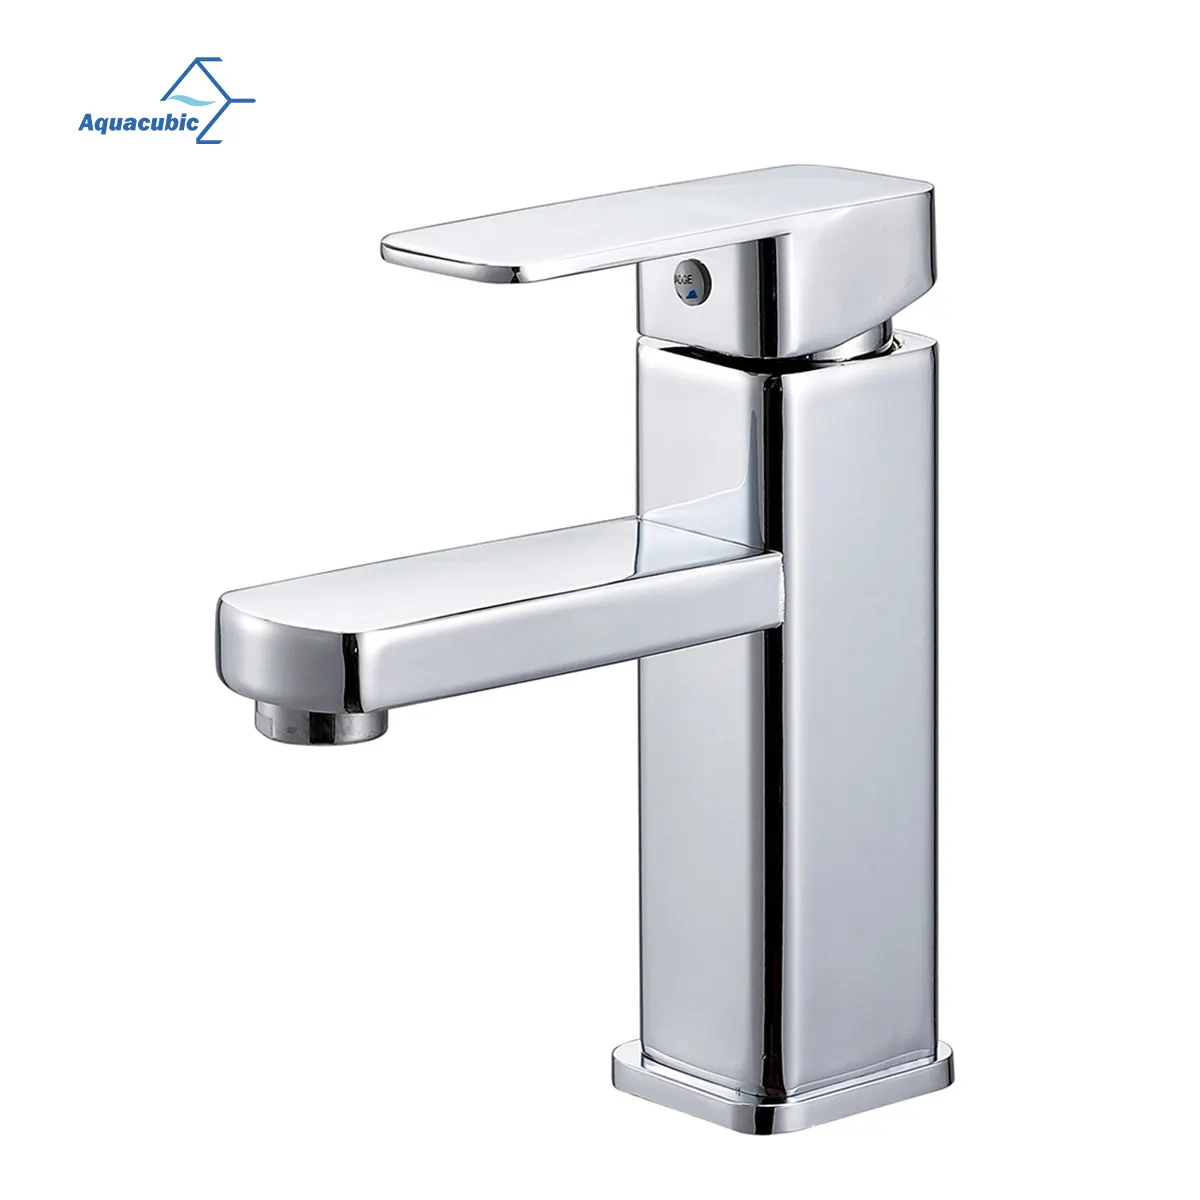 Aquacubic cUPC UPC Brass body Washroom Lavatory Single Handle Bathroom Basin Faucet